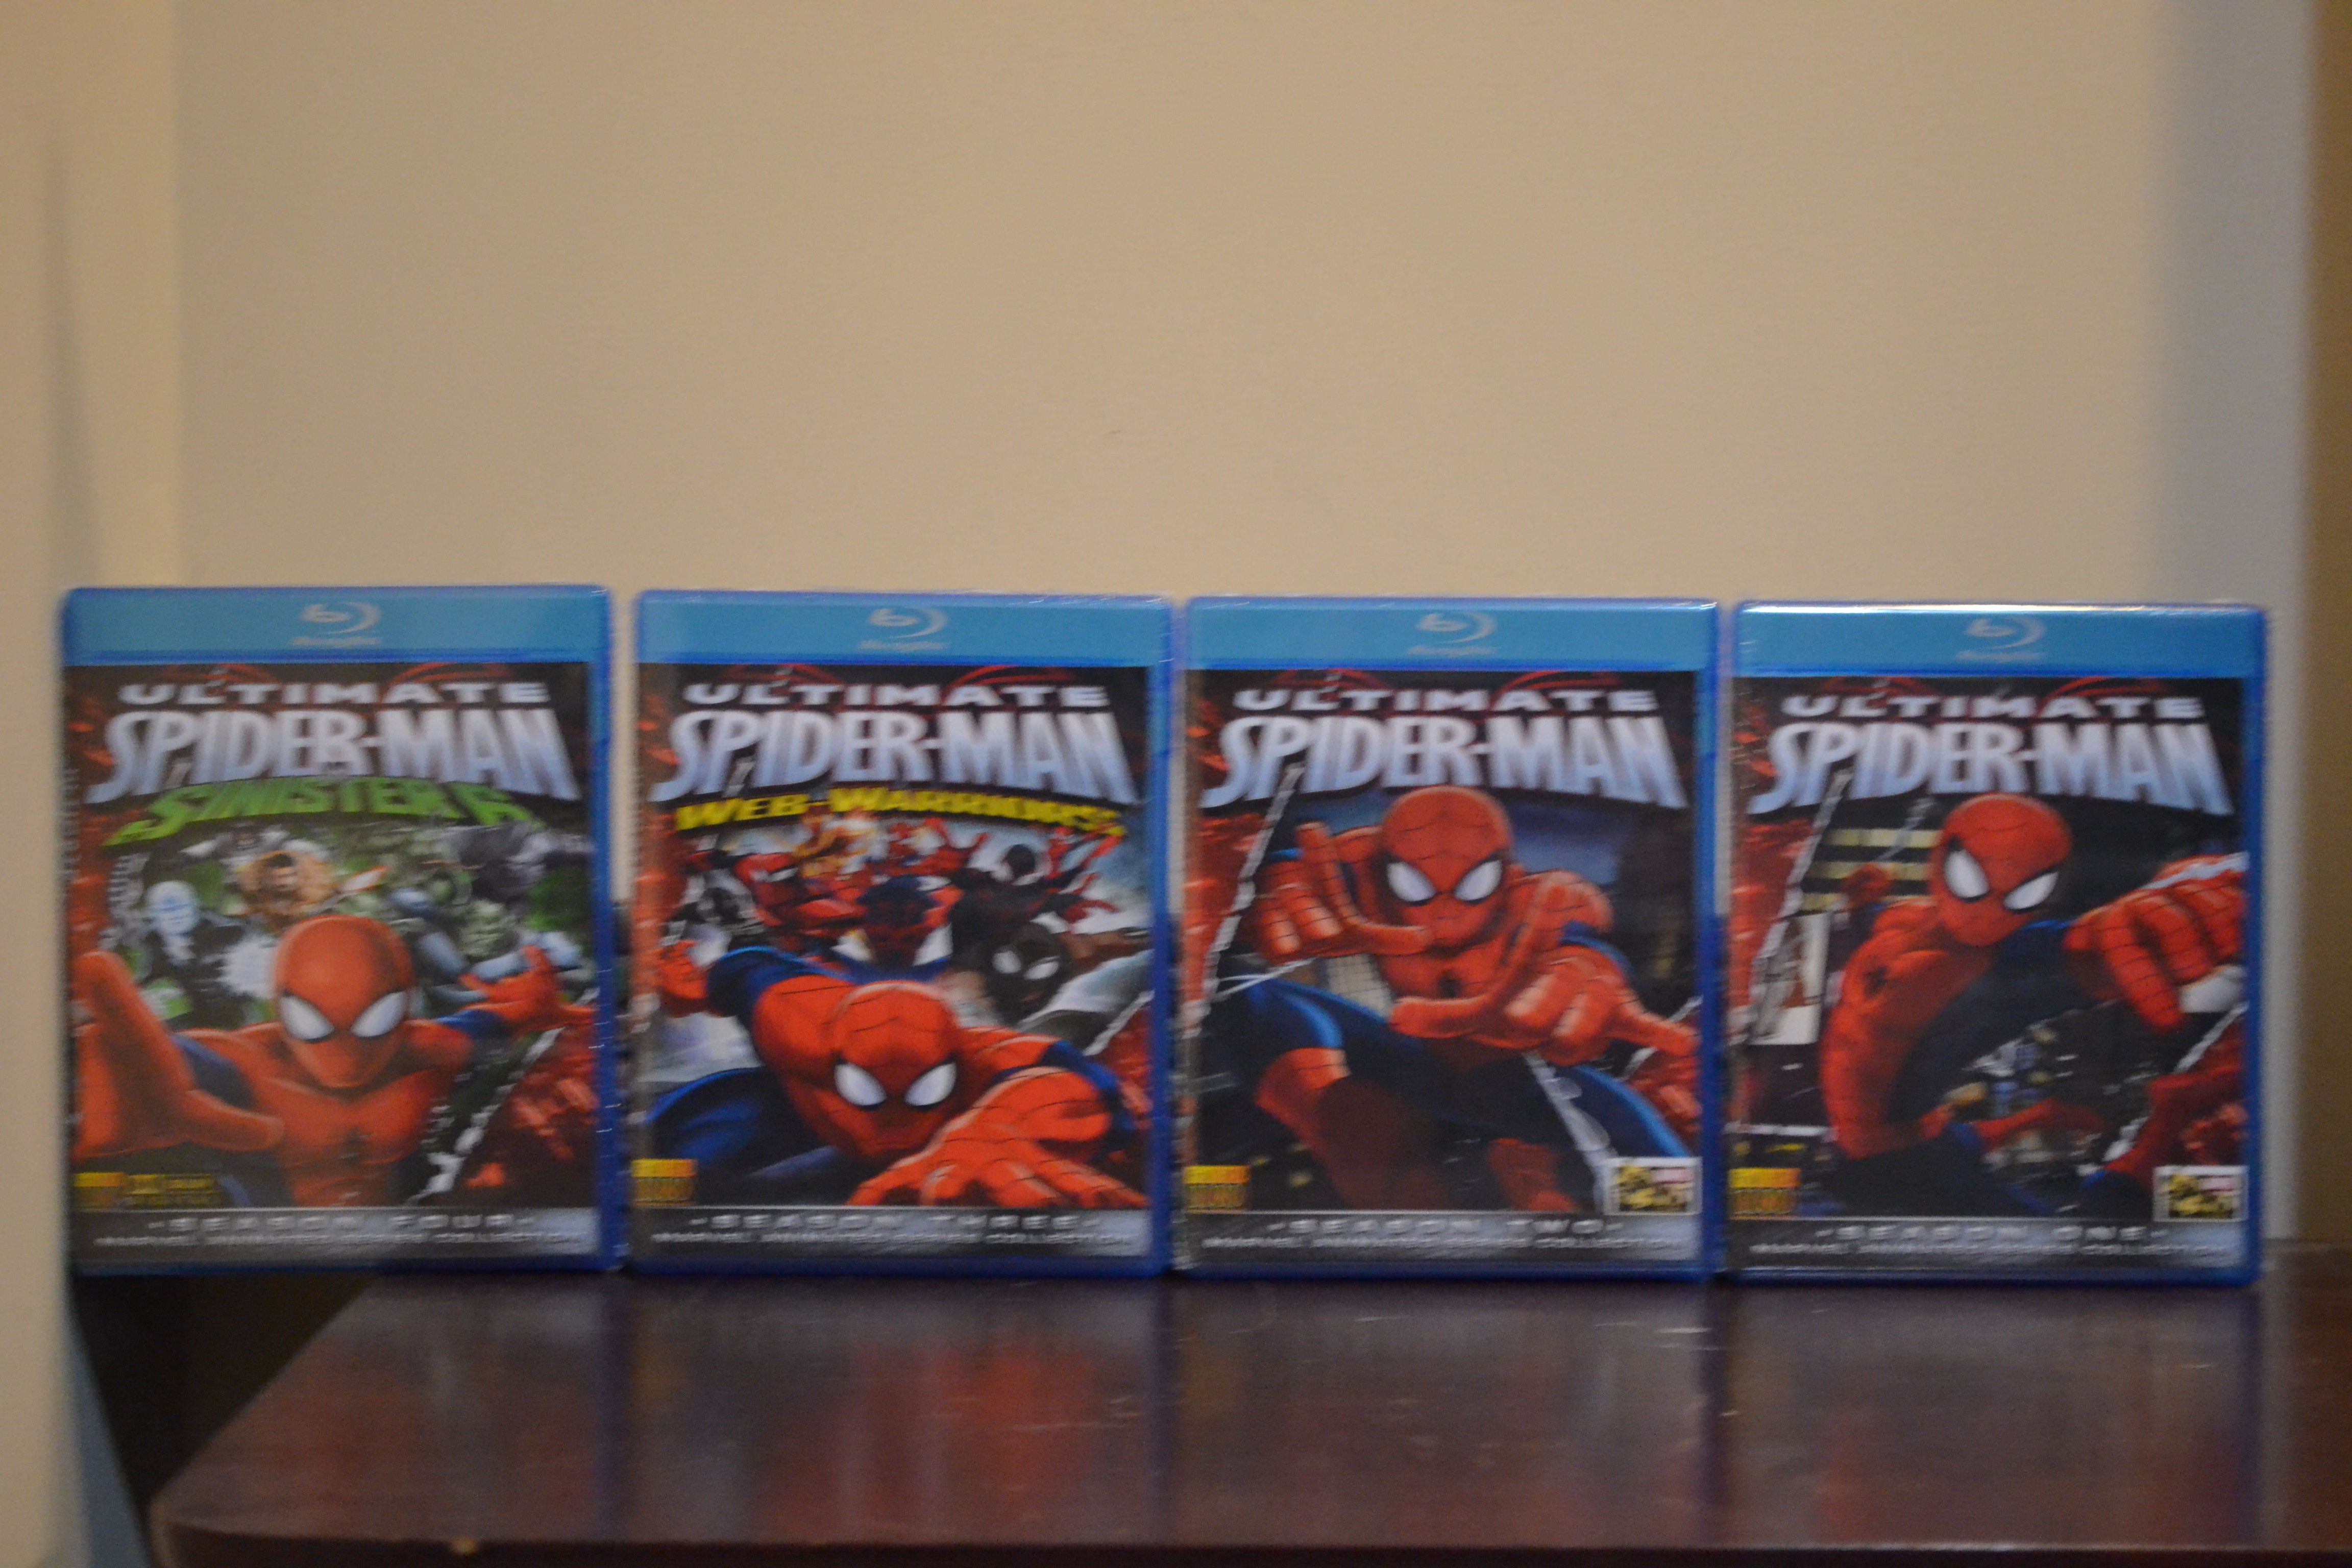 Ultimate Spider-Man: Season 1